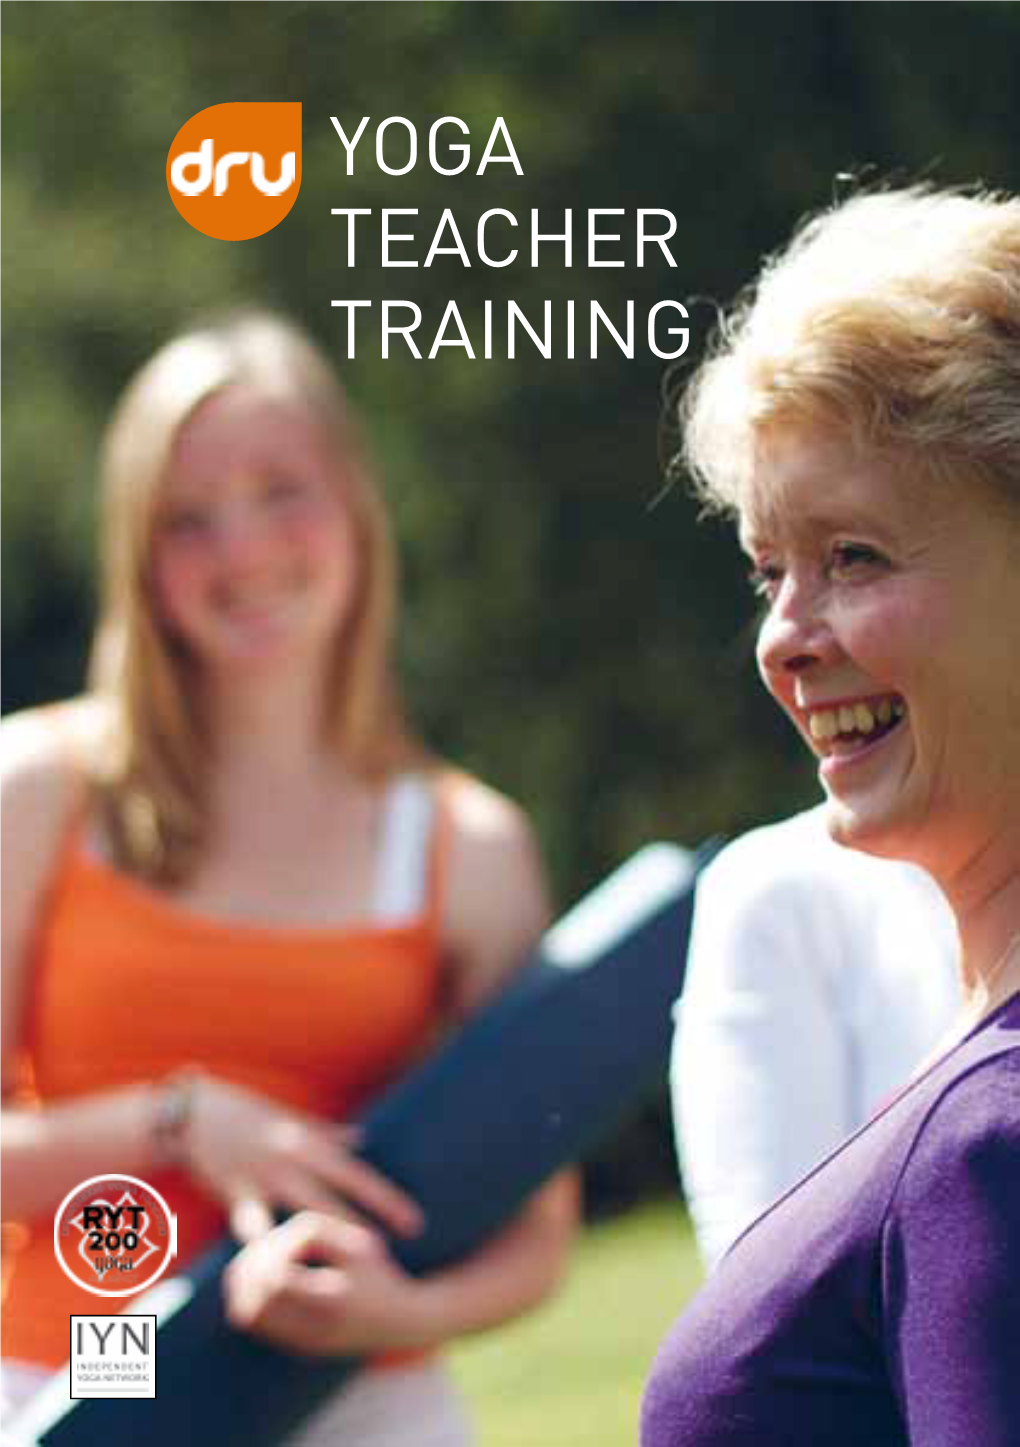 Yoga Teacher Training Giving Back | Changing Lives